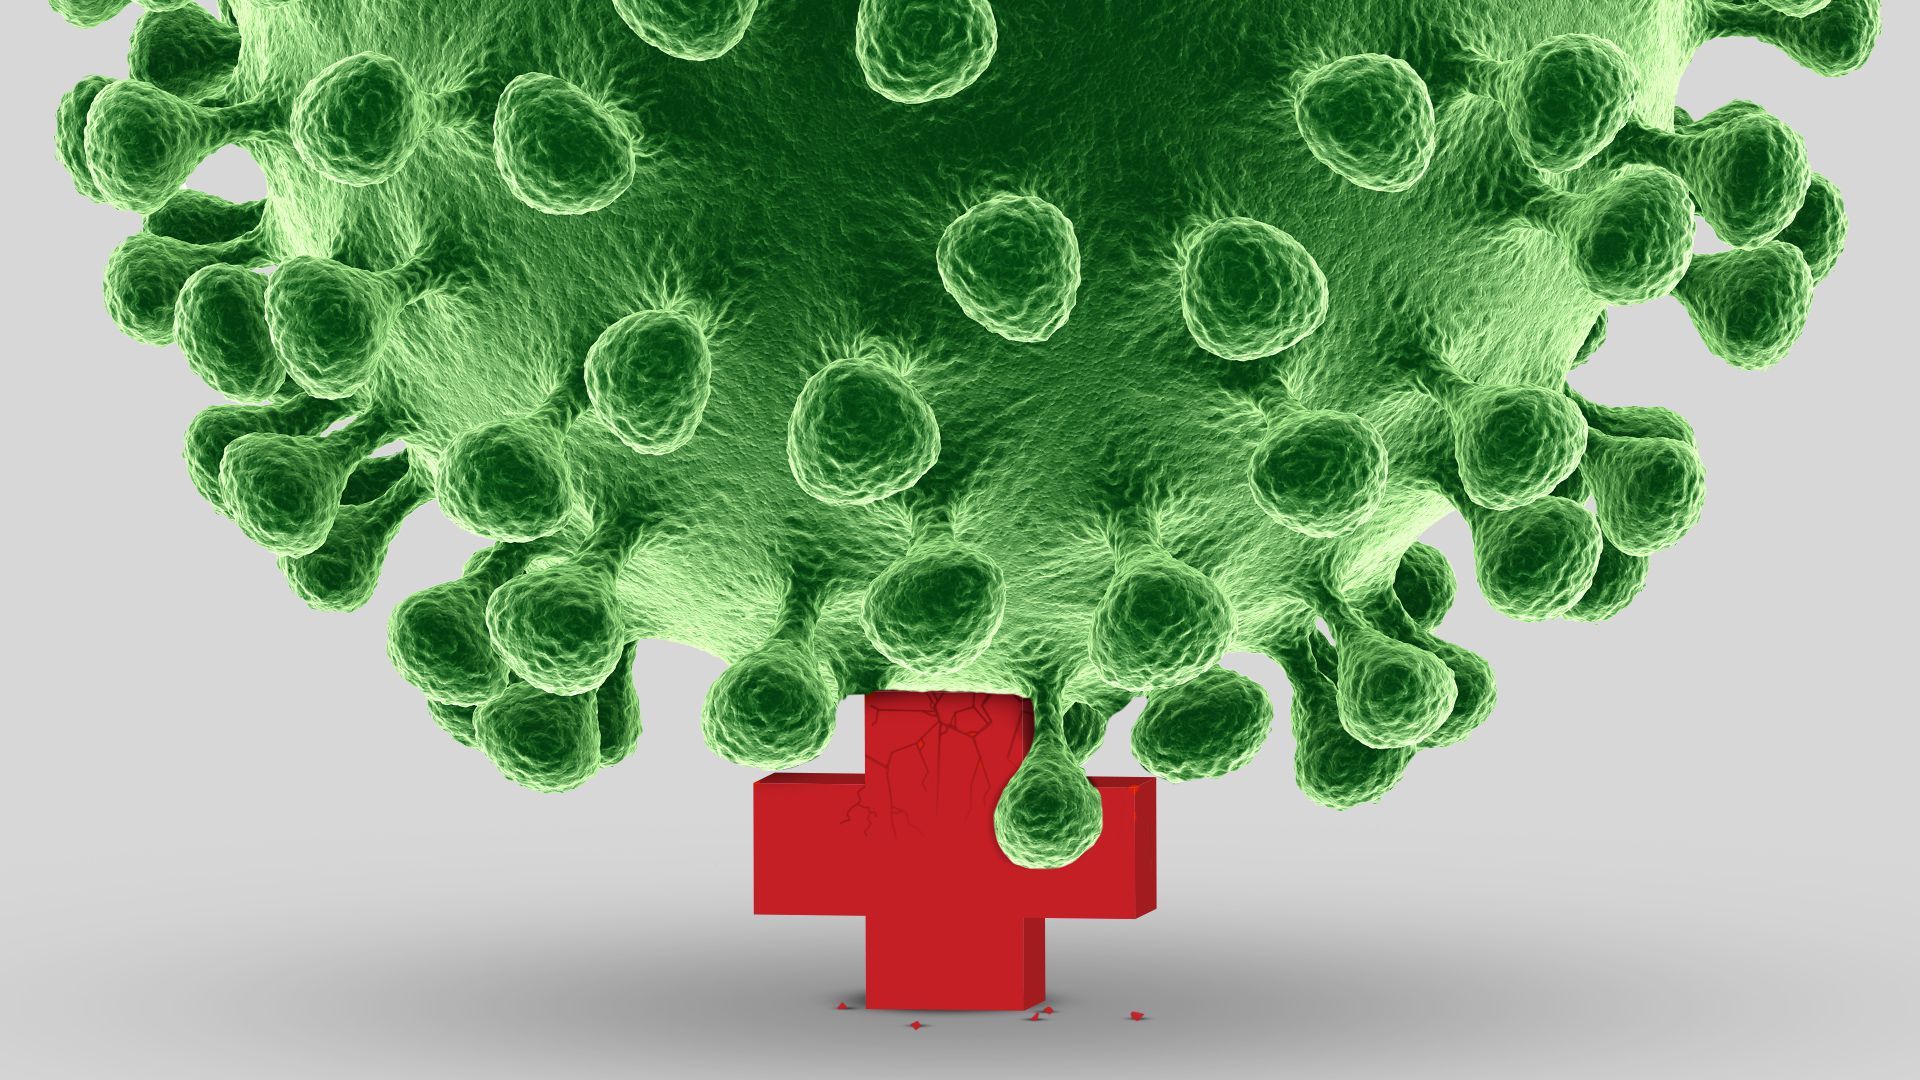 Coronavirus public health efforts threatened by high health care